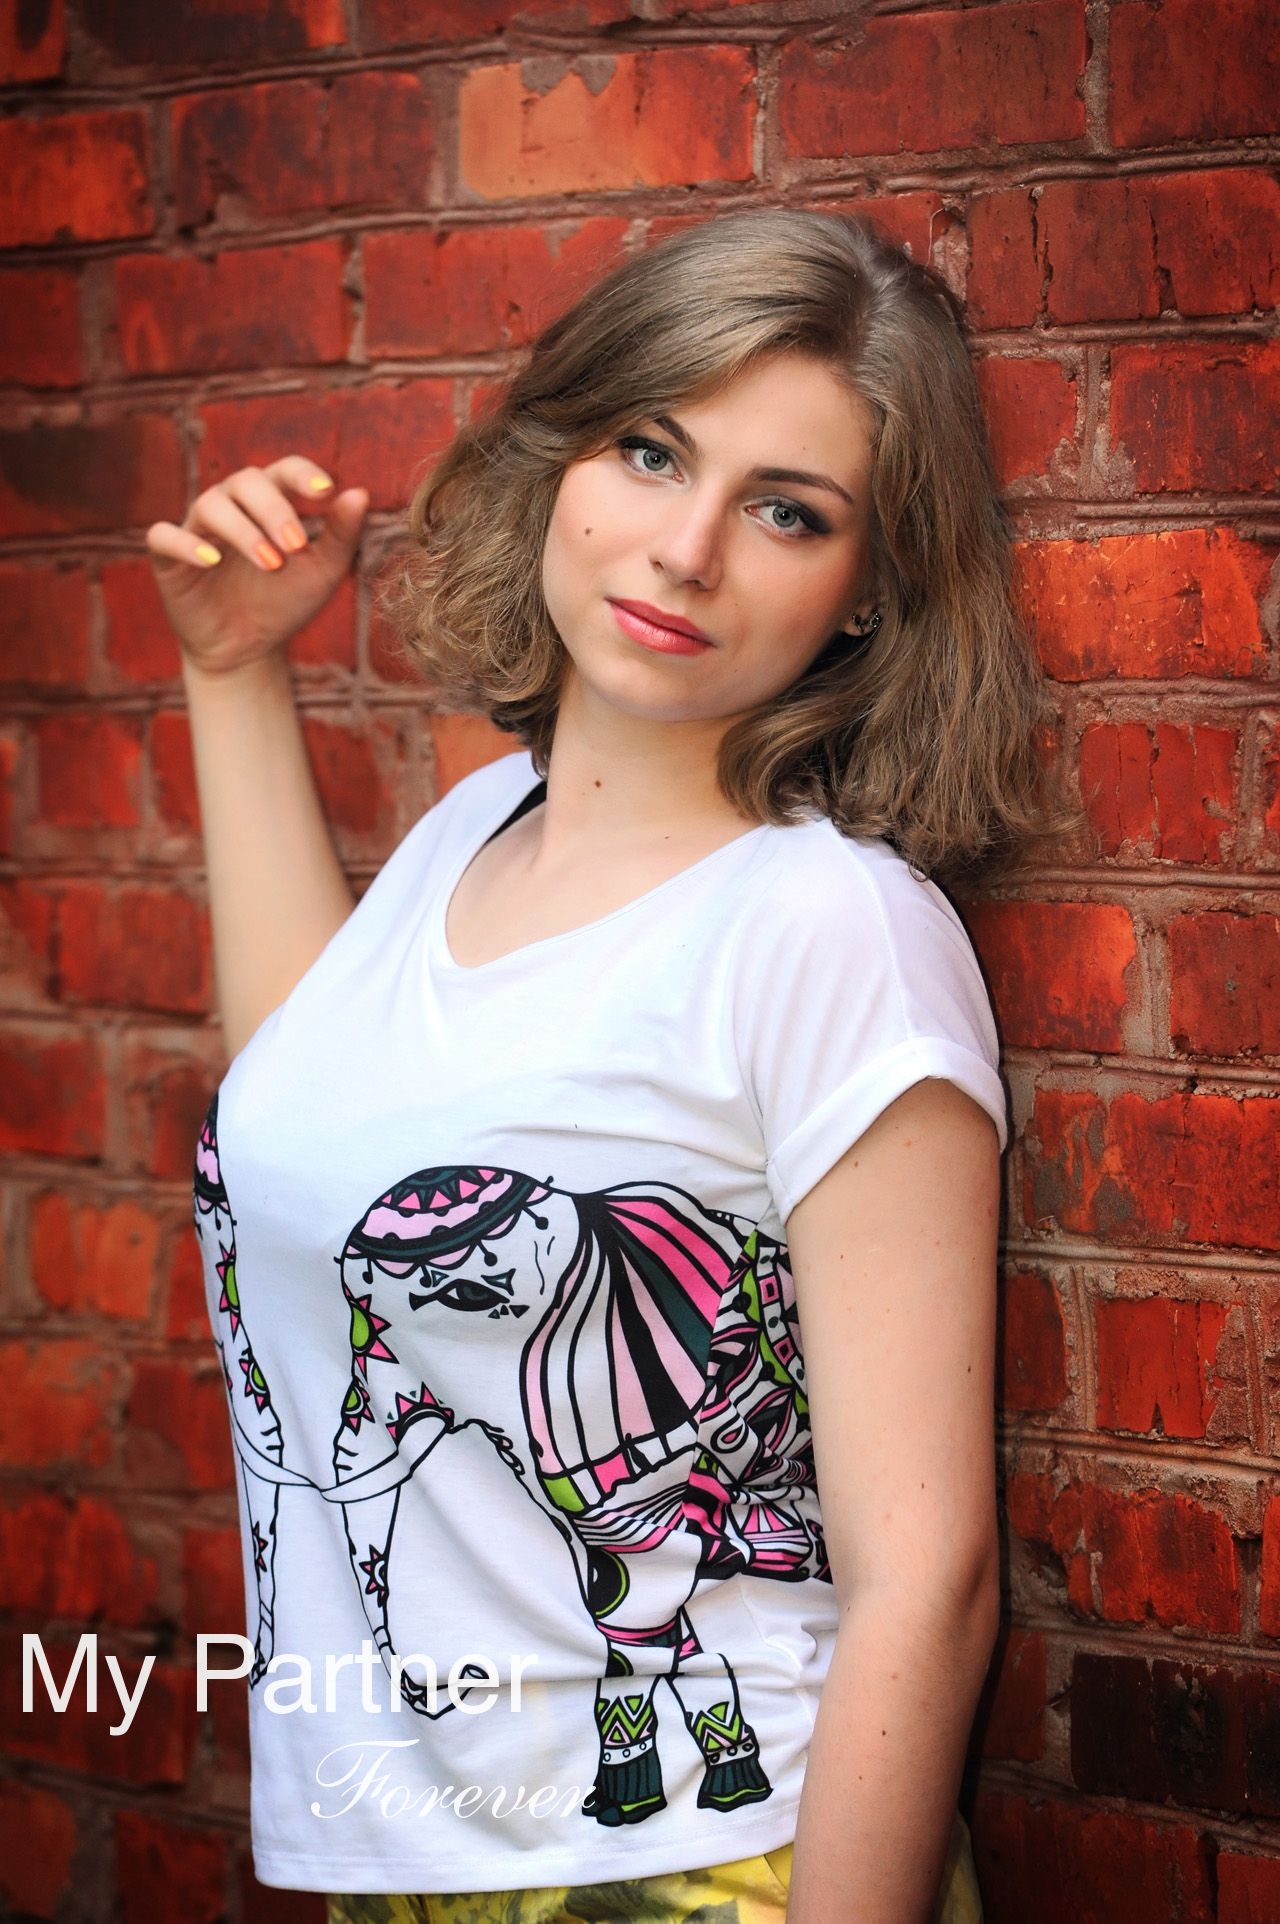 Dating Site to Meet Sexy Ukrainian Girl Margarita from Kharkov, Ukraine